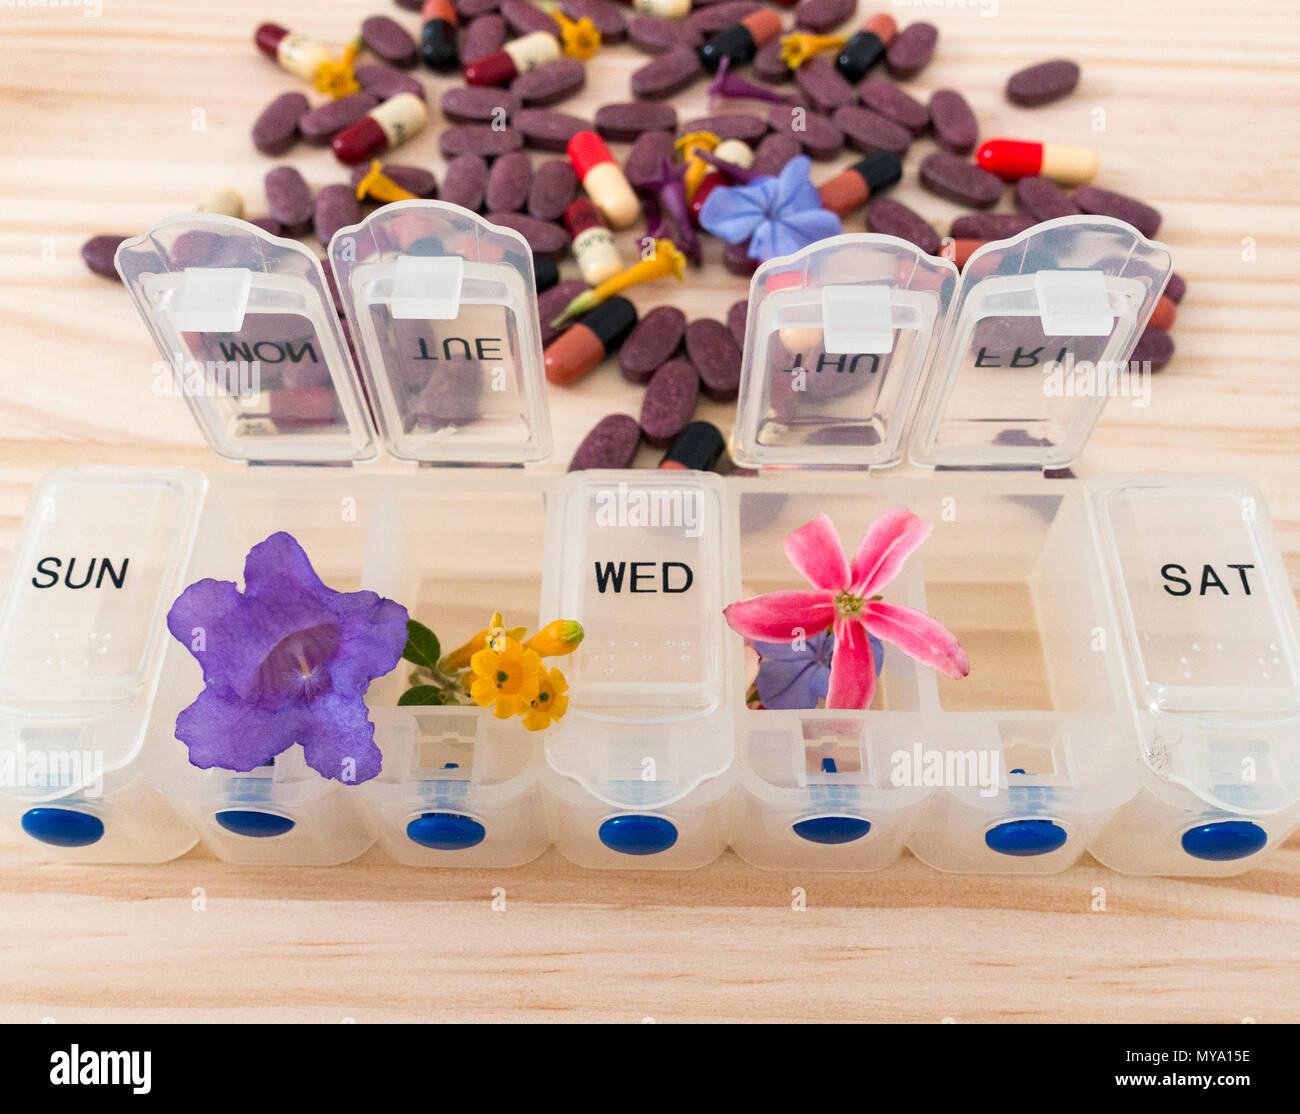 La homeopatía concepto imagen: píldora semanal organizador con flores, antibióticos y tabletas de arándano en segundo plano. Foto de stock